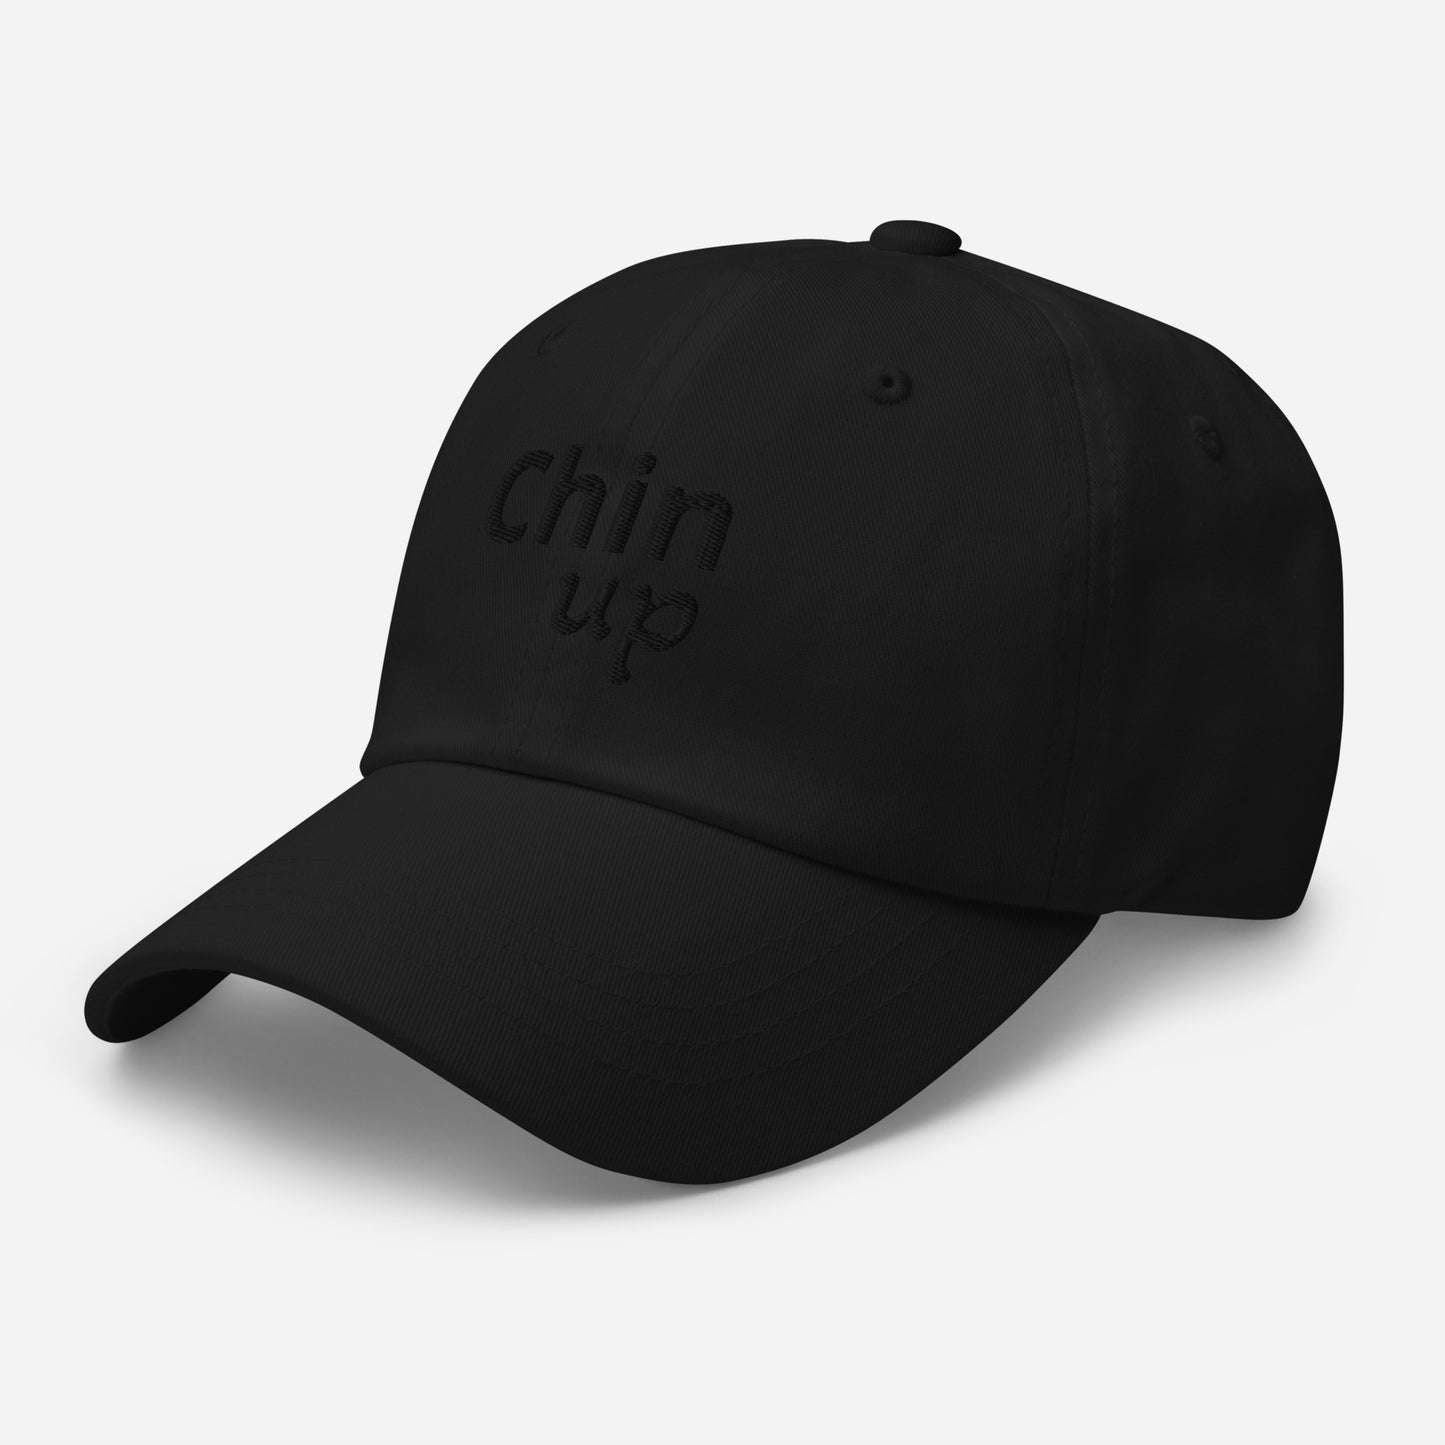 Black on black baseball cap